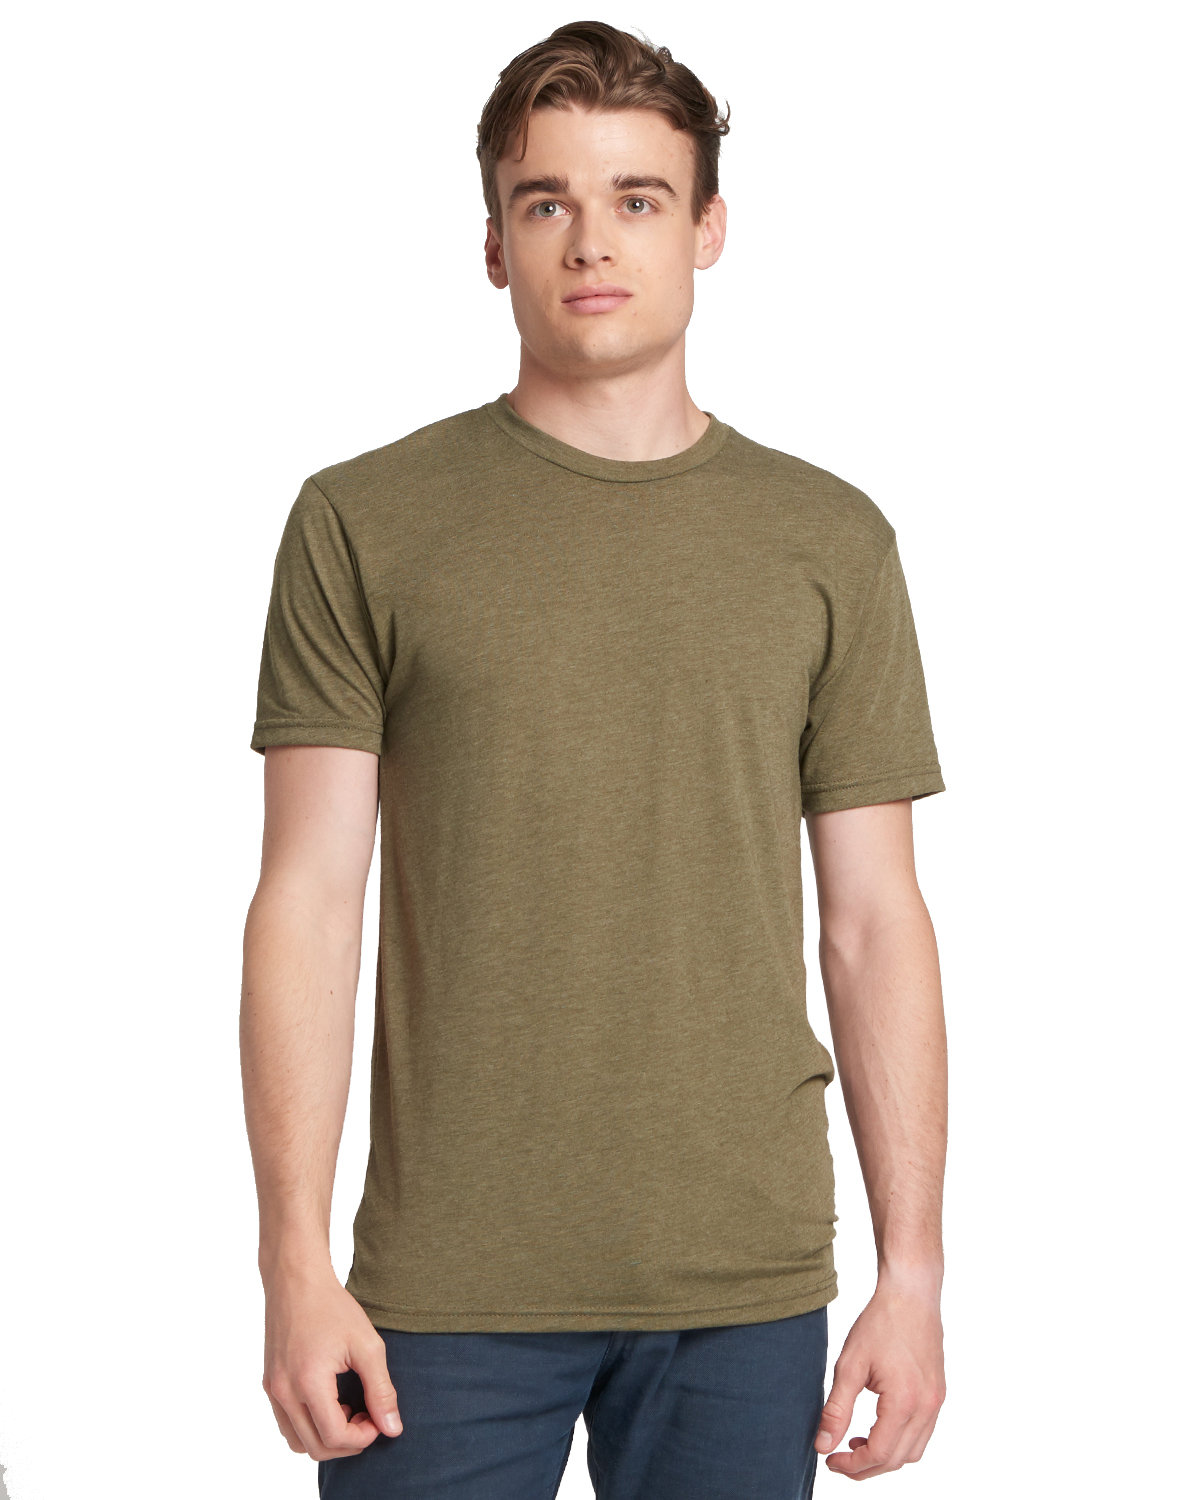 Next Level Apparel® 6010 Unisex Tri-Blend T-Shirt - Wholesale Apparel and  Supplies